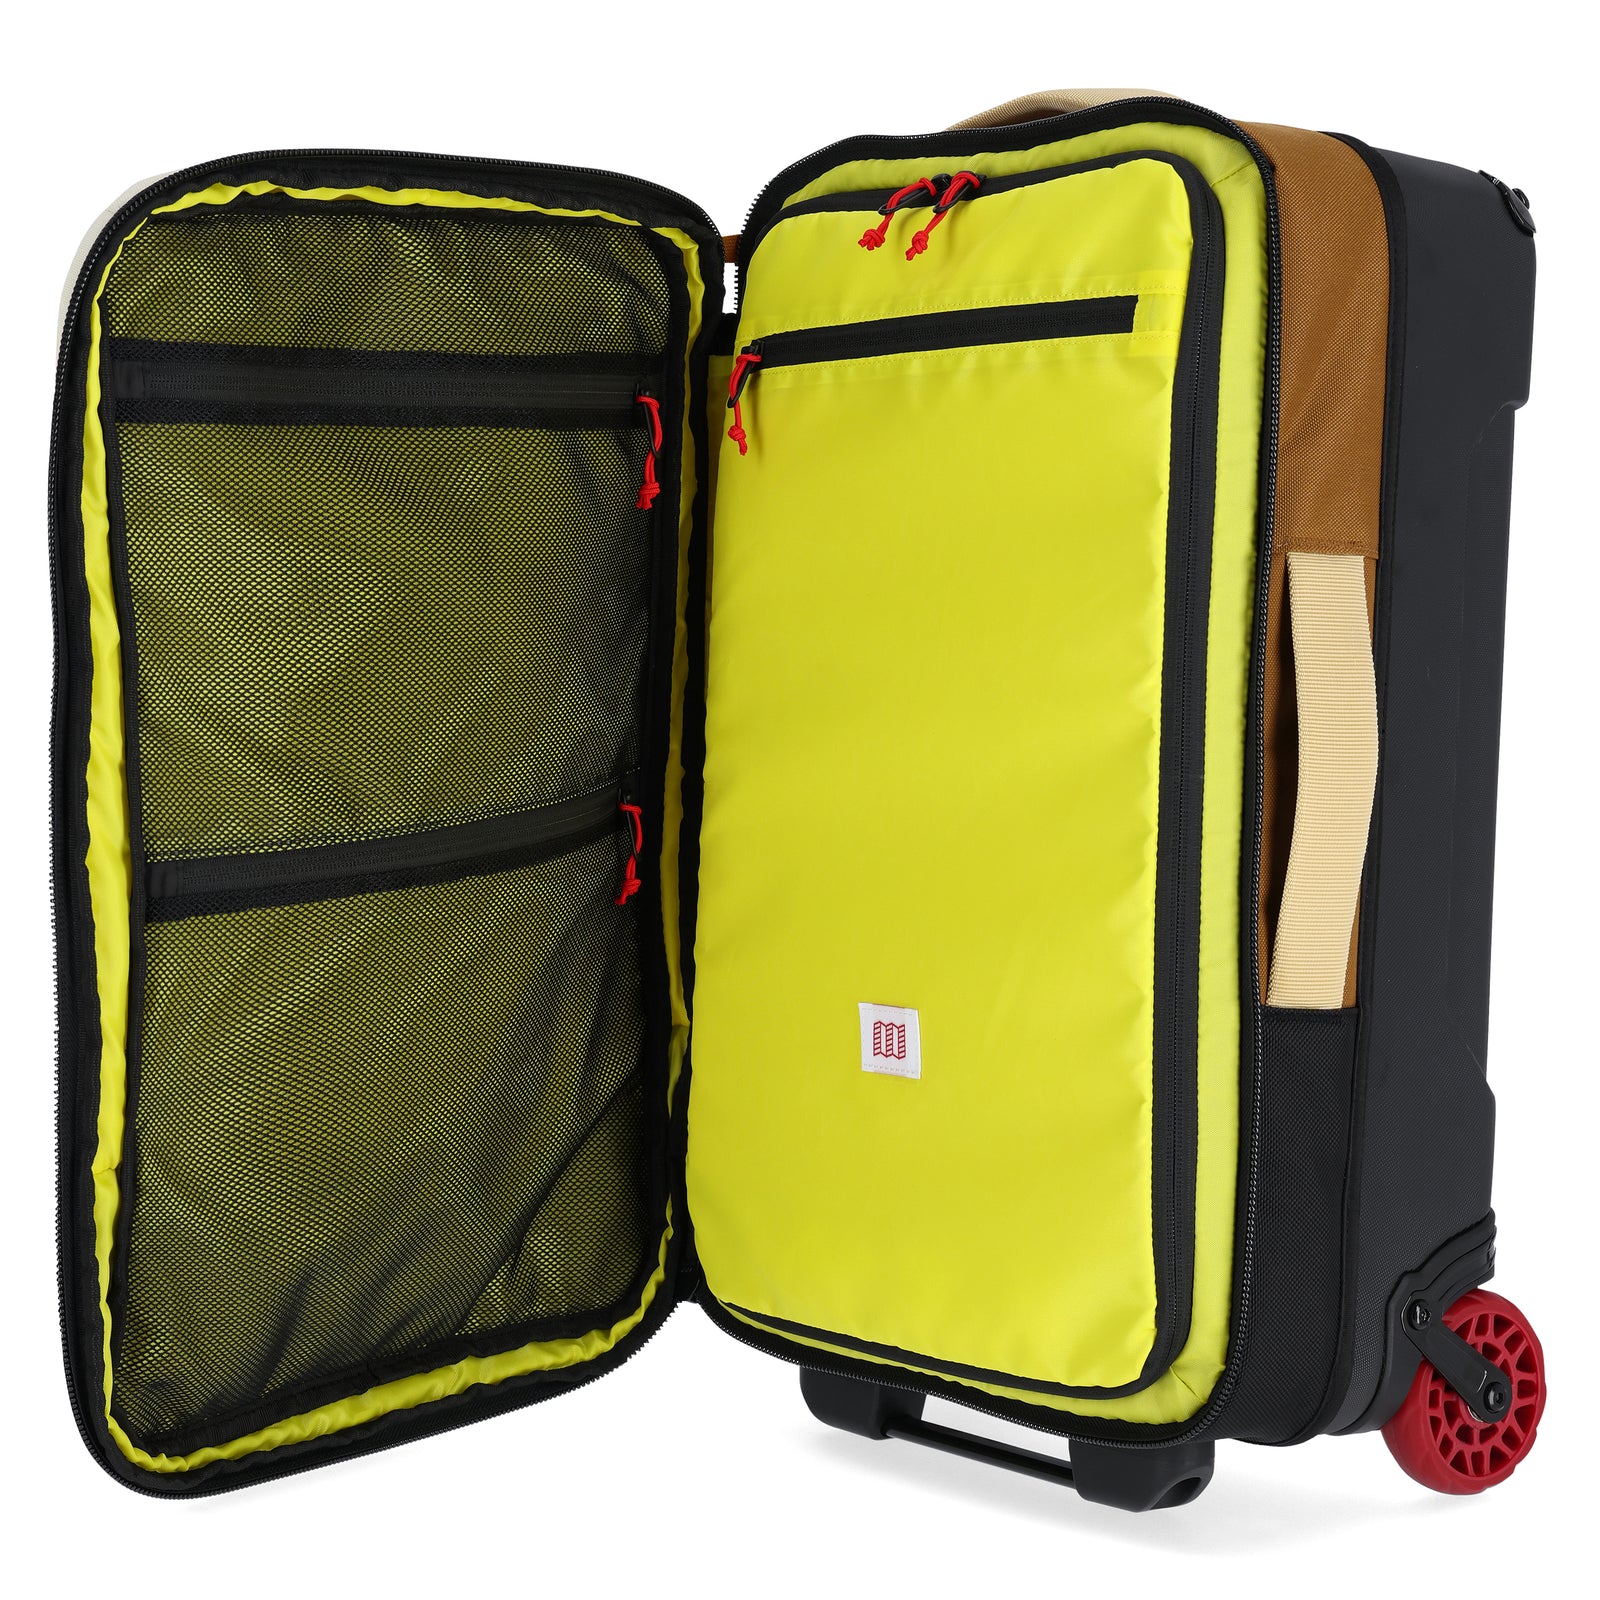 Detail shot of Topo Designs Global Travel Bag Roller  in "Bone White / Olive"